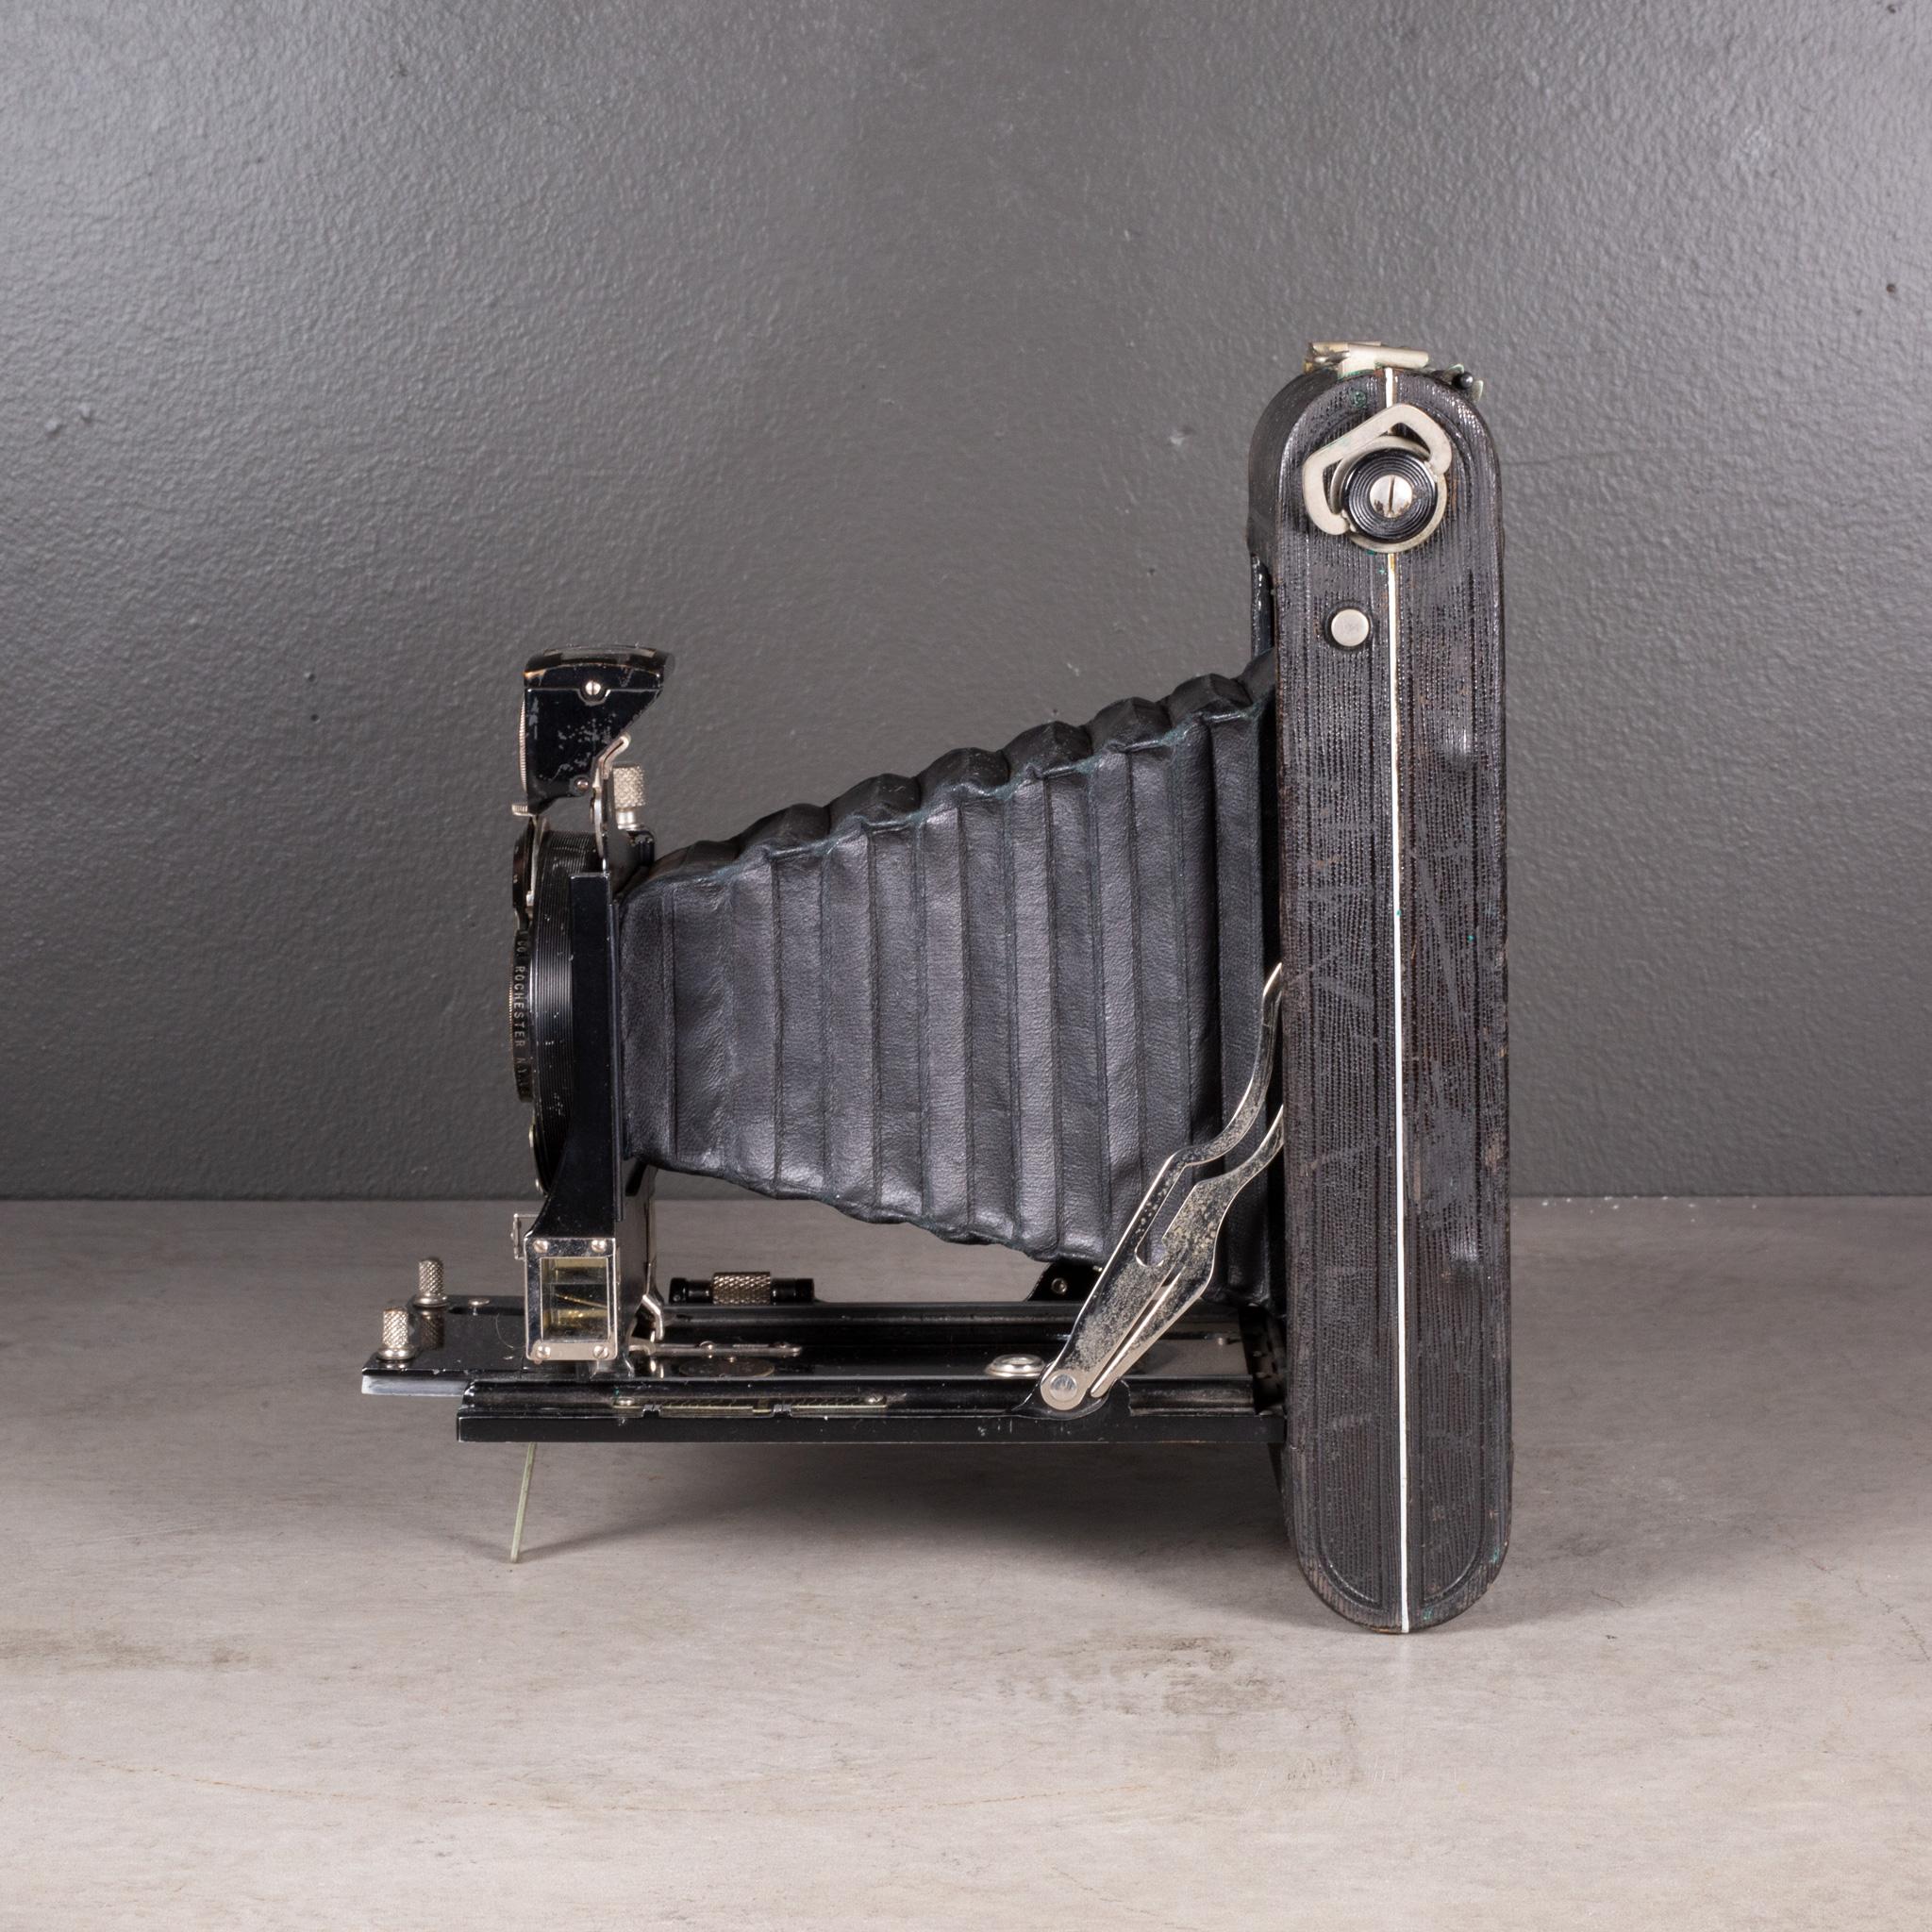 antique folding camera